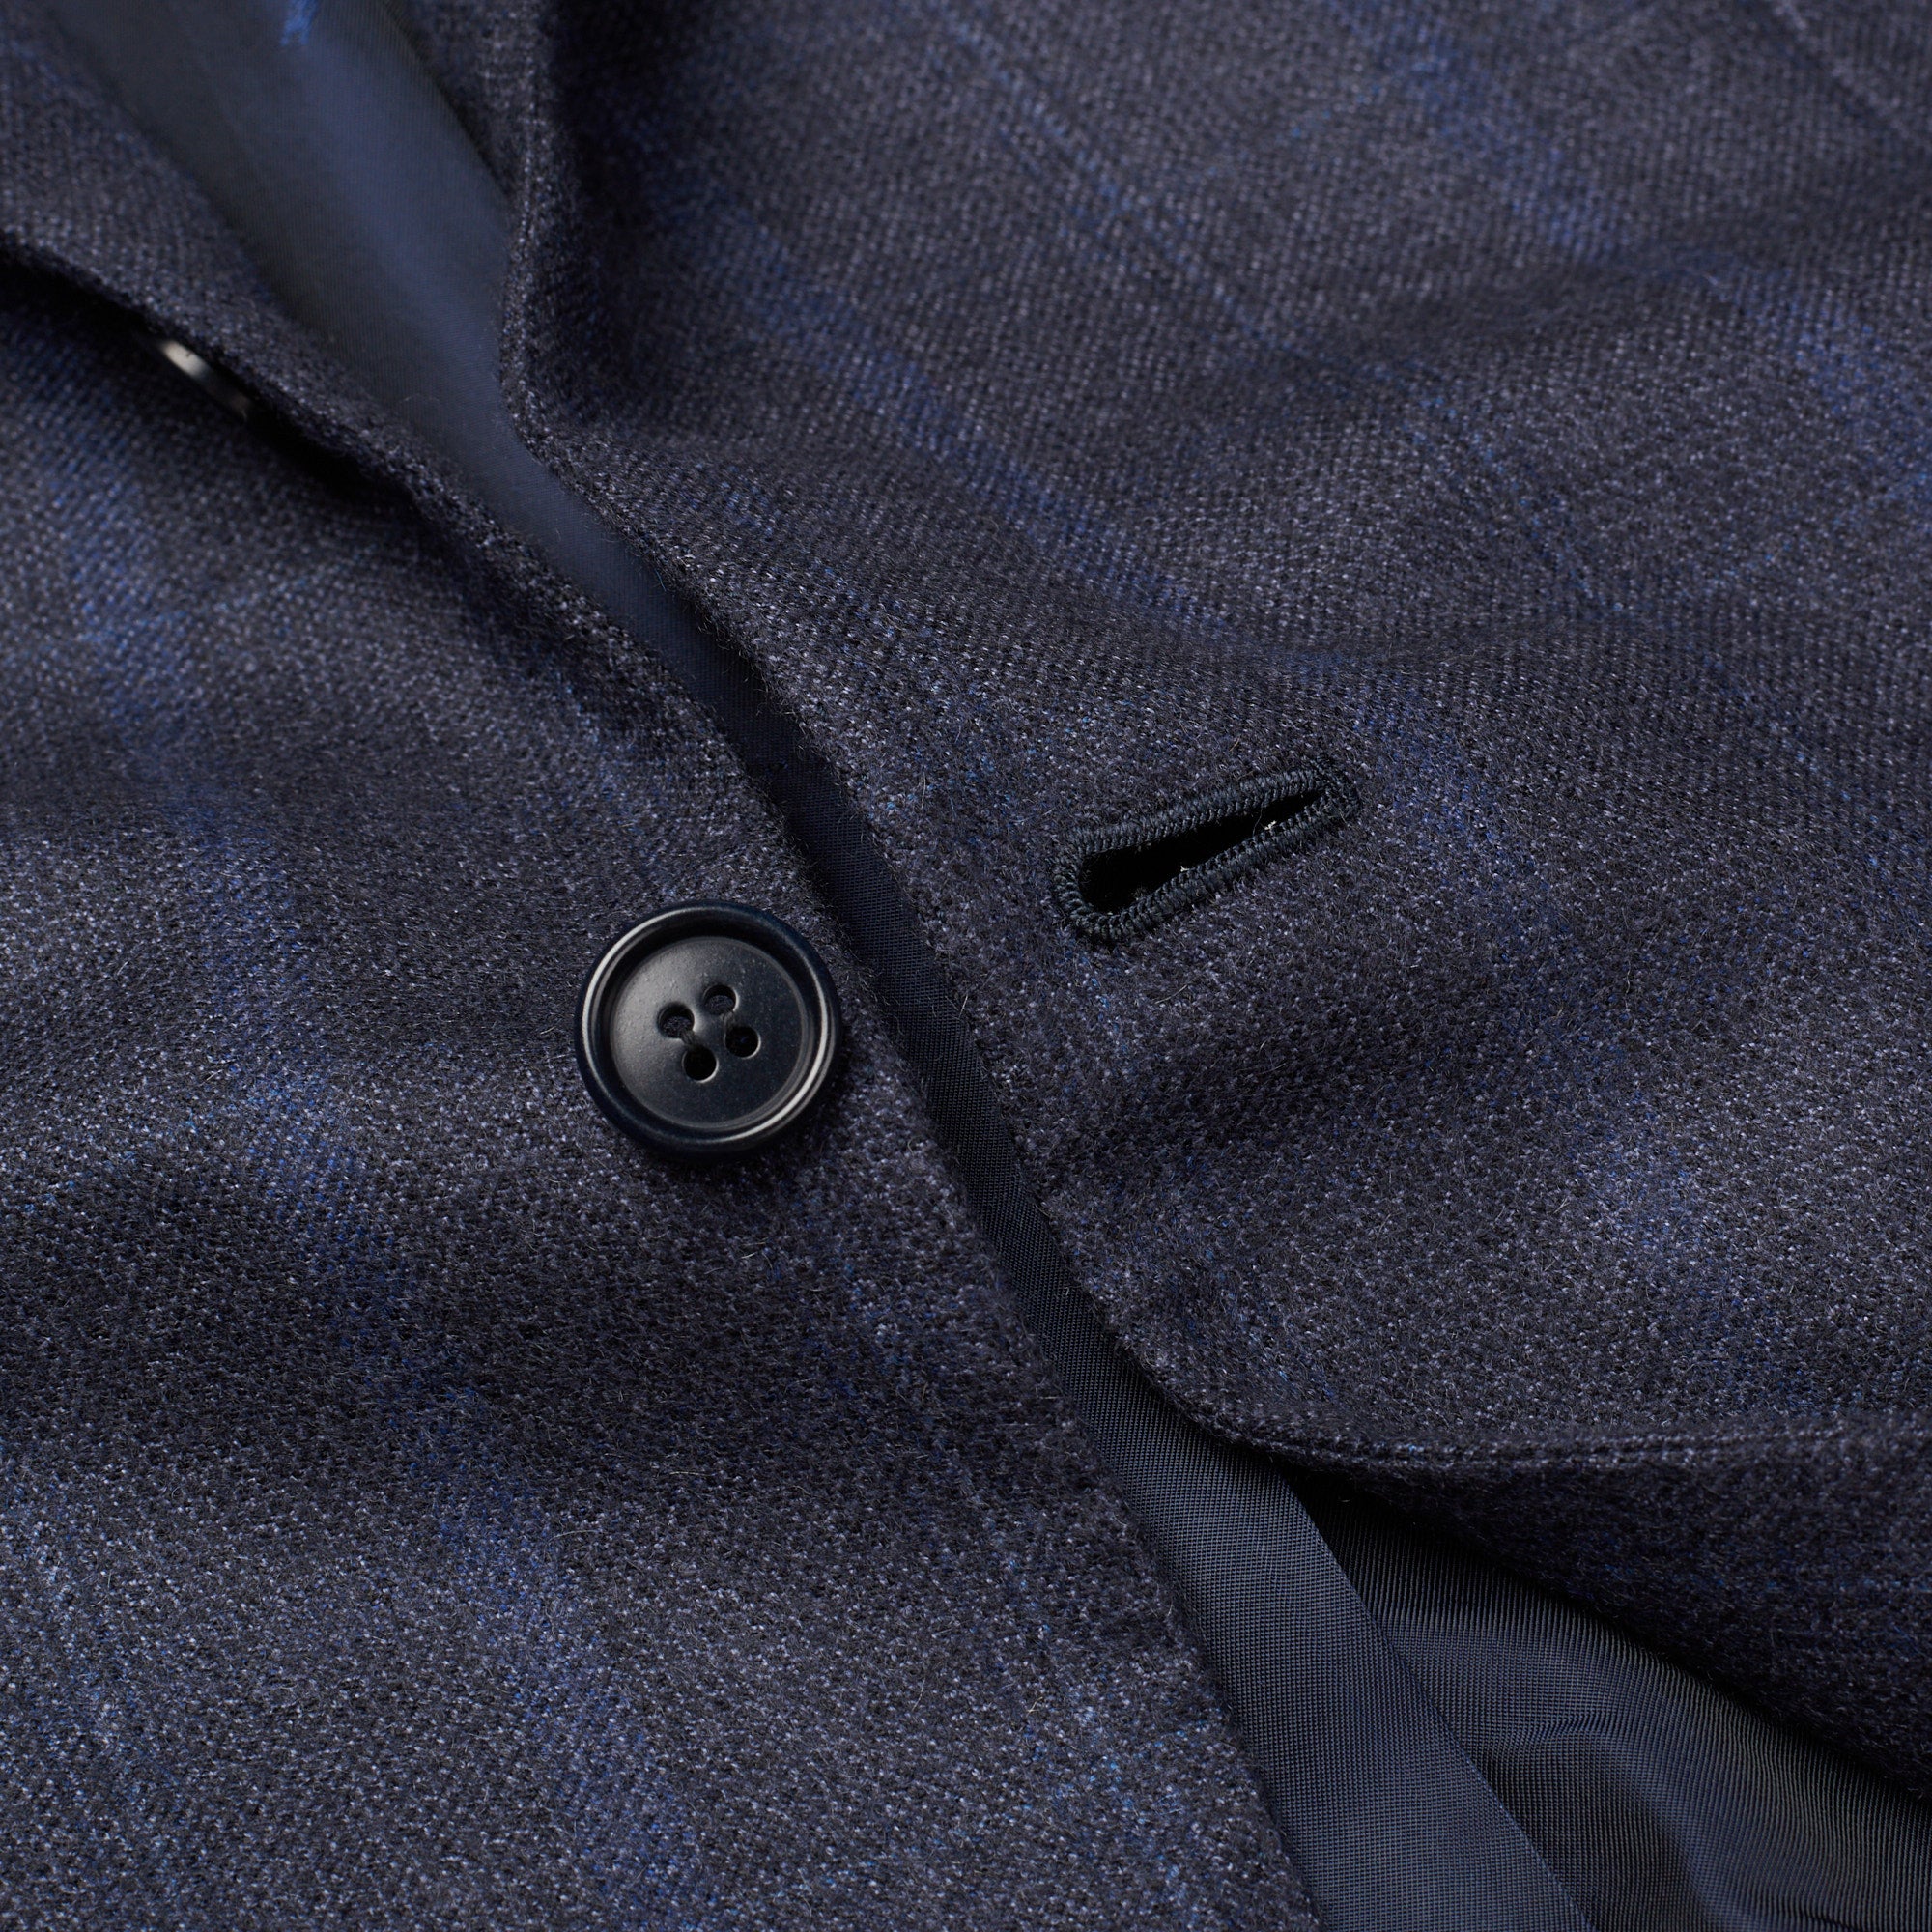 KITON Napoli Handmade Navy Blue Plaid Cashmere Jacket Sport Coat EU 50 NEW US 40 KITON